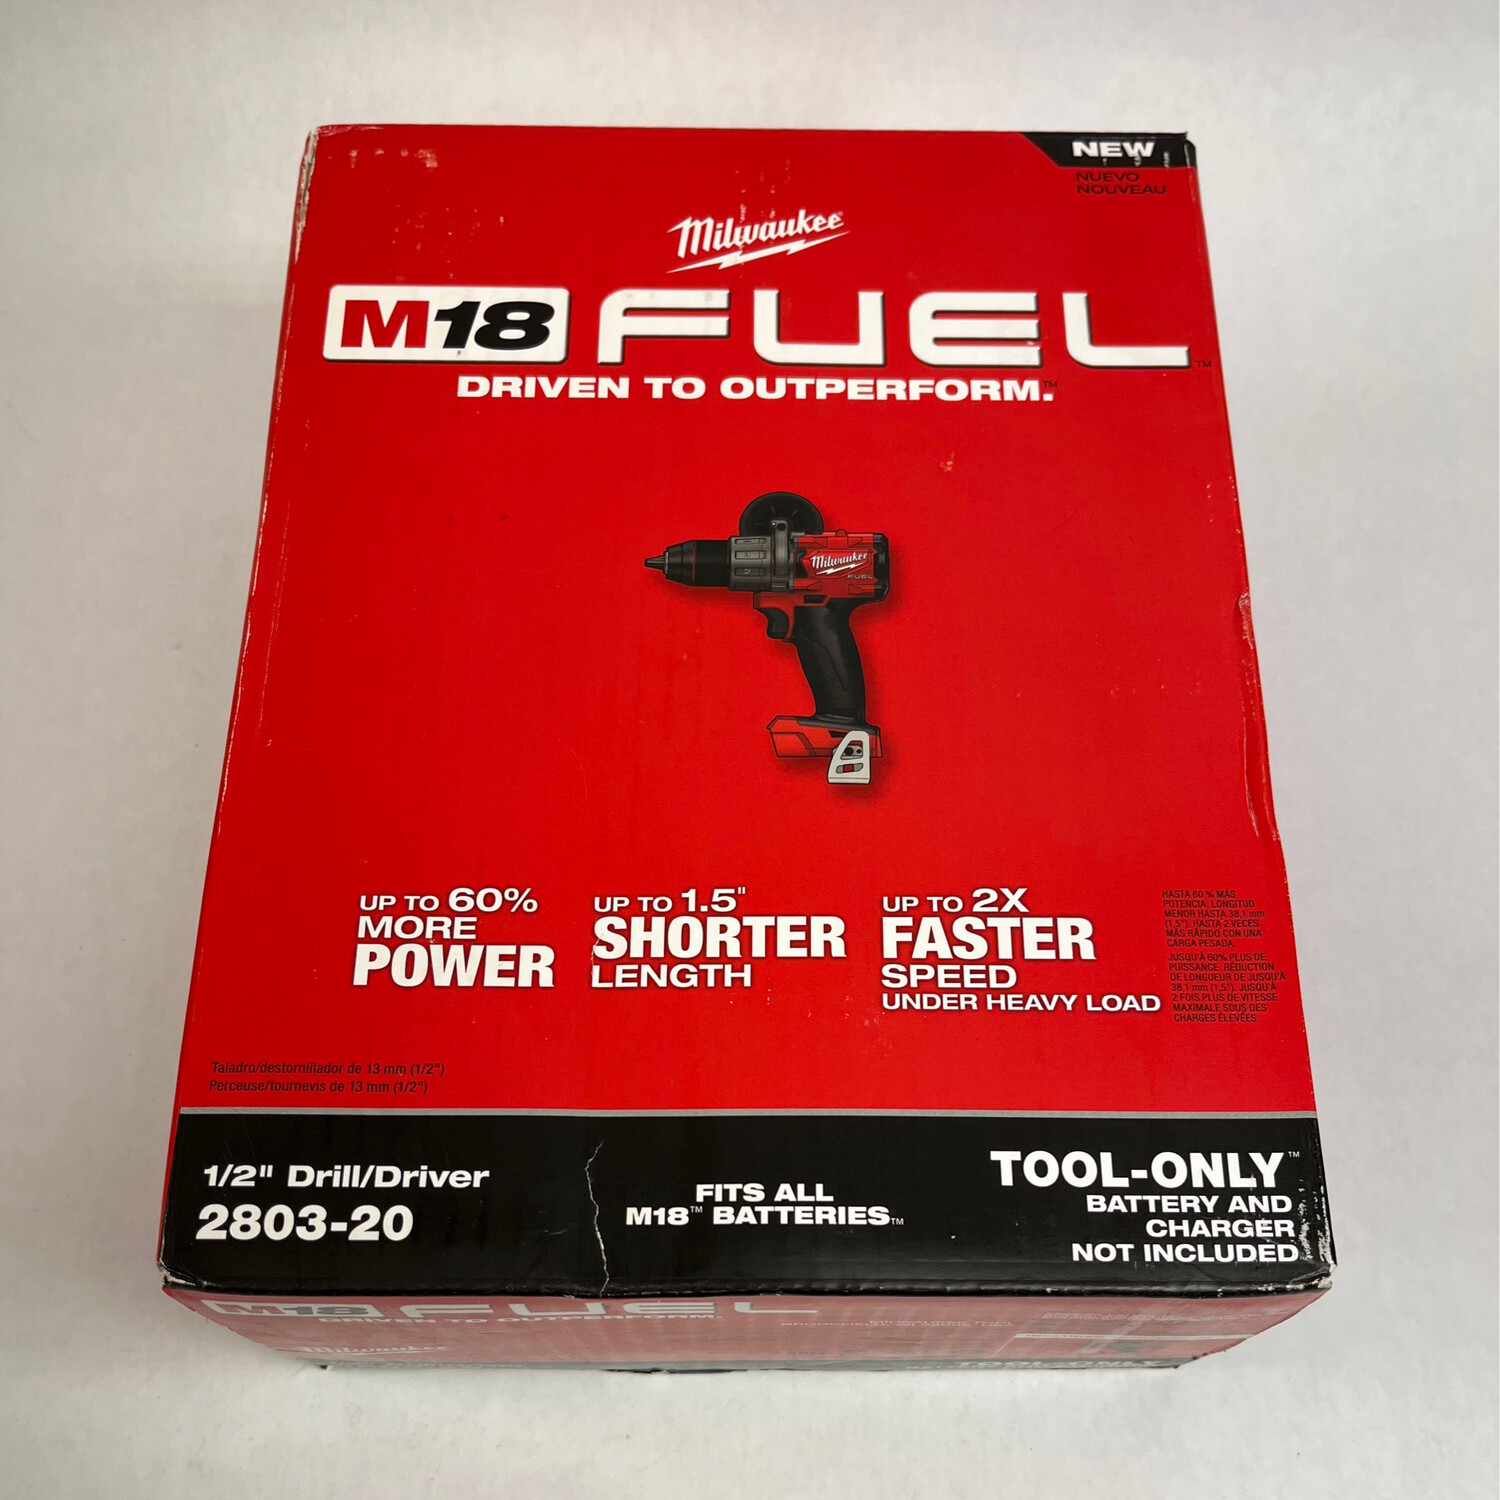 Milwaukee M18 Fuel 1/2” Drill/Driver, 2803-20